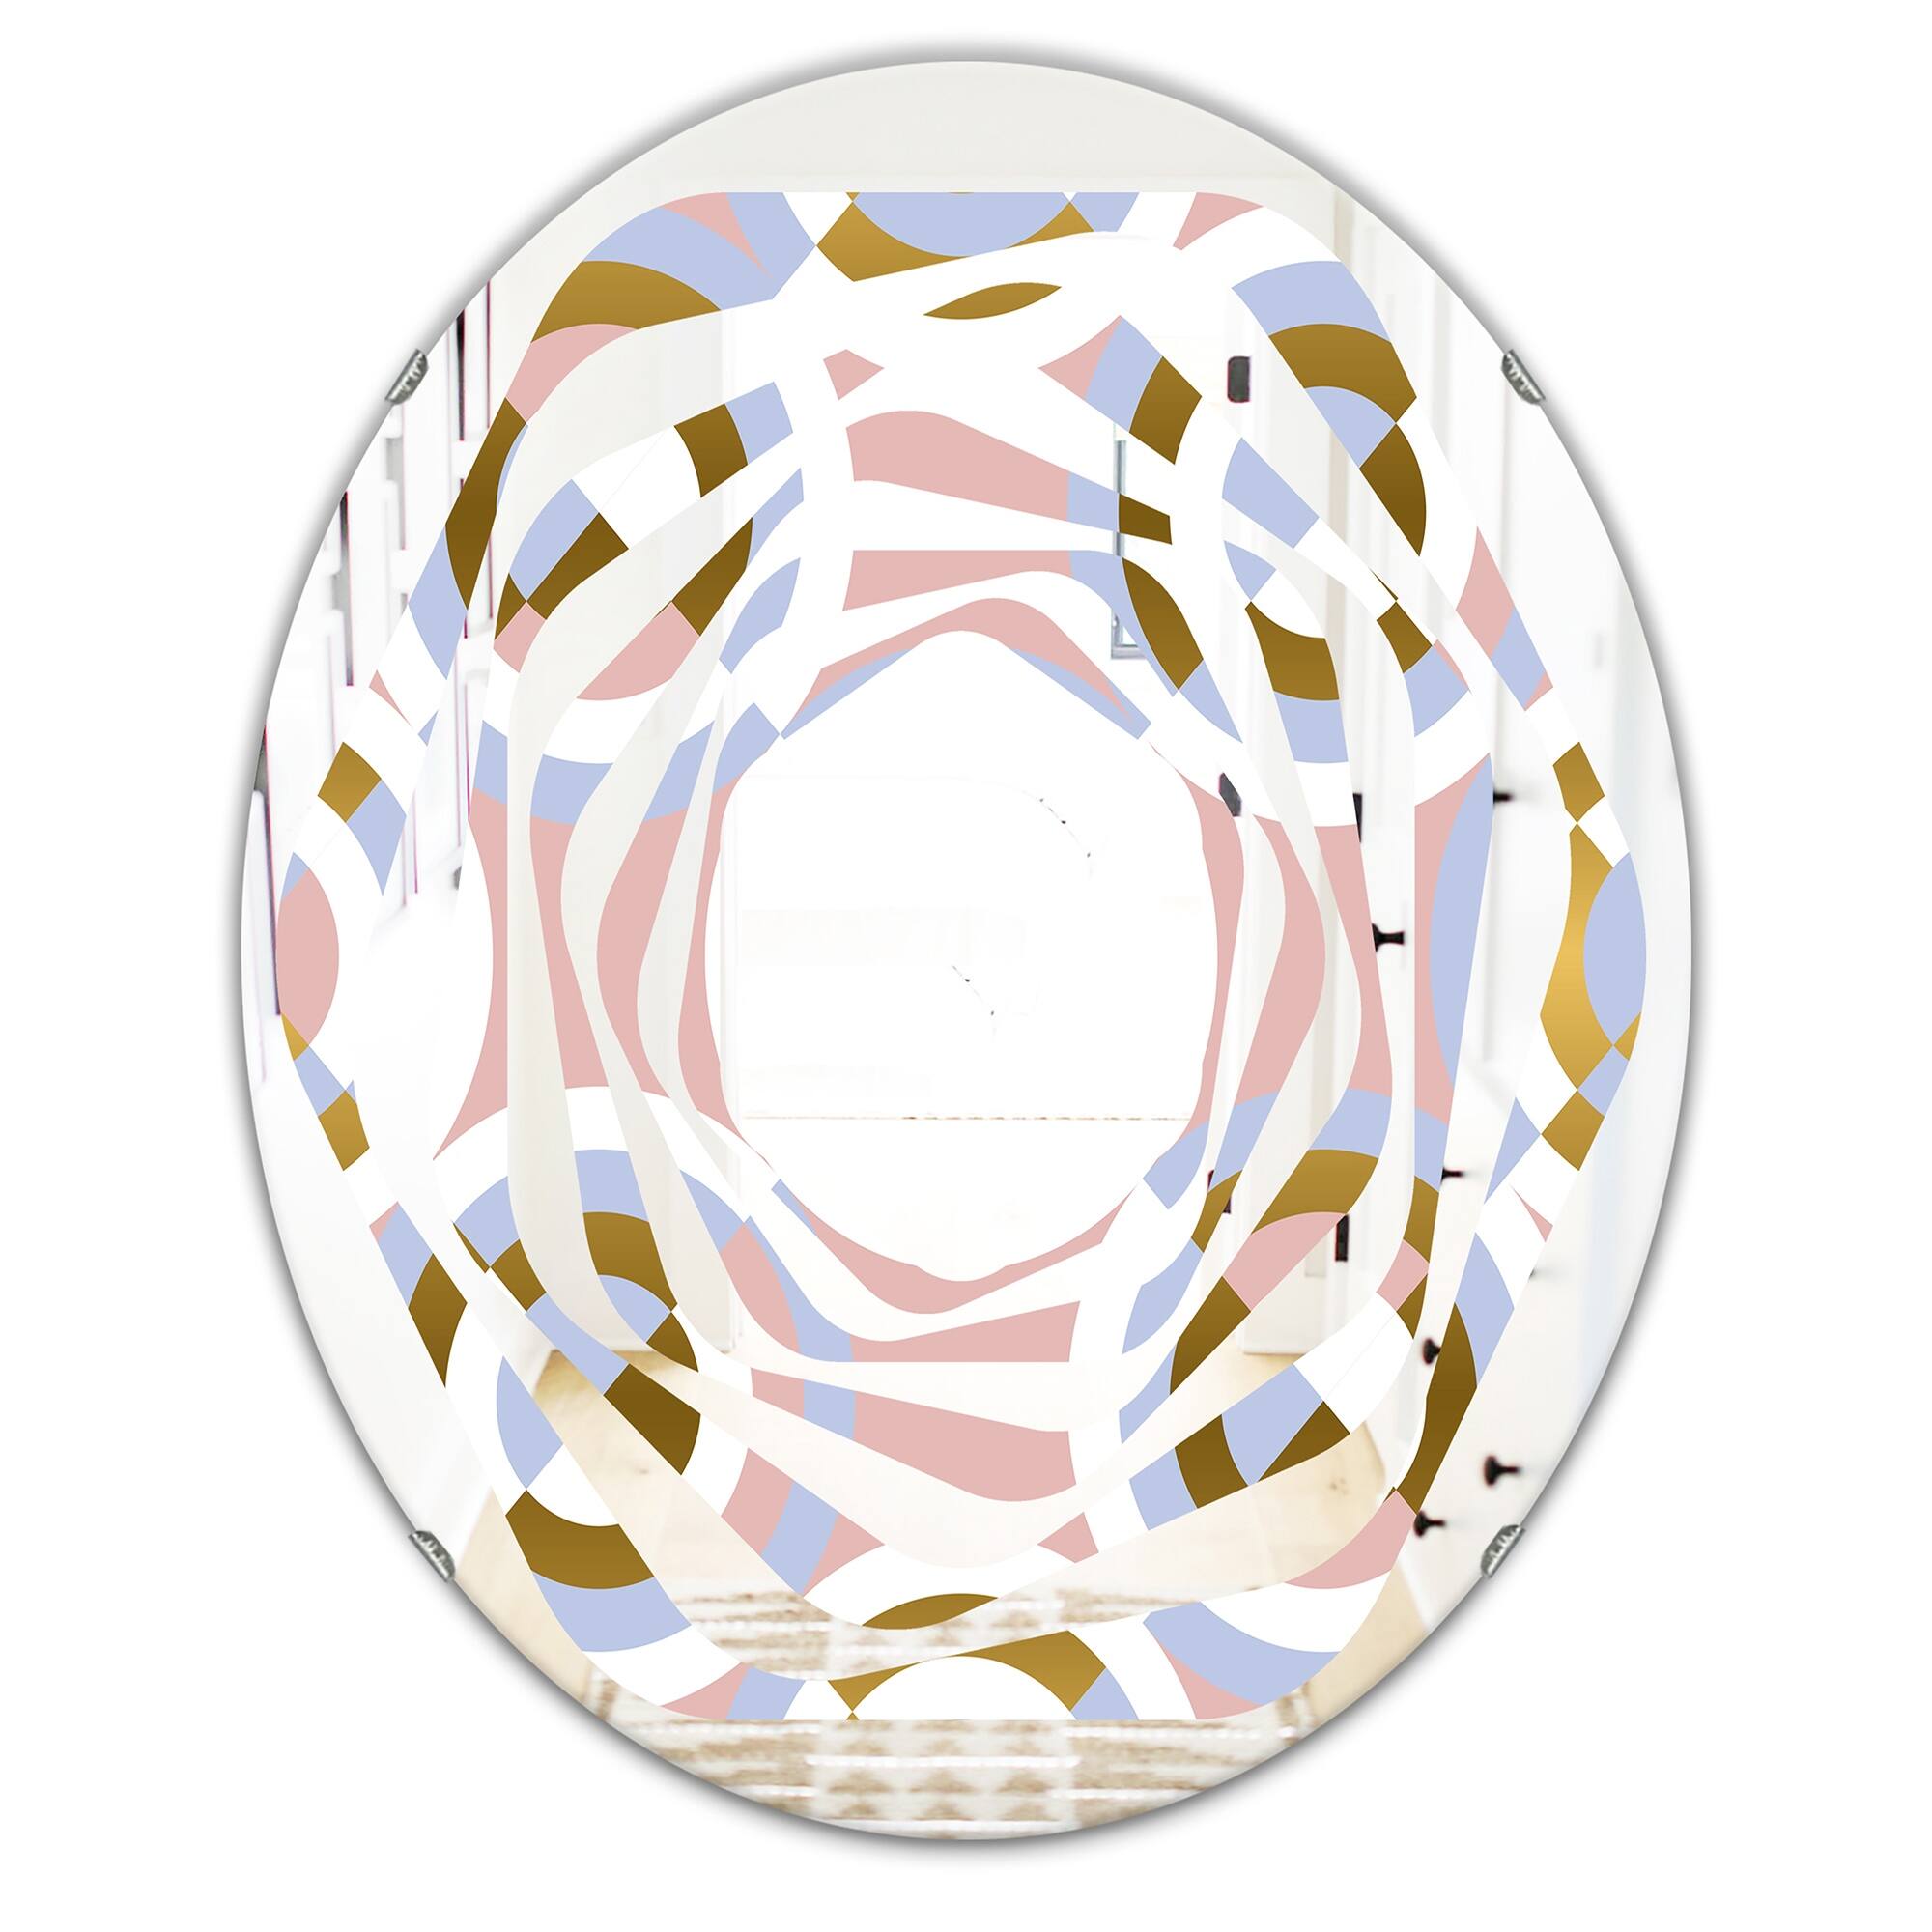 Designart 'Circular geometric shapes pattern' Printed Modern Round or ...